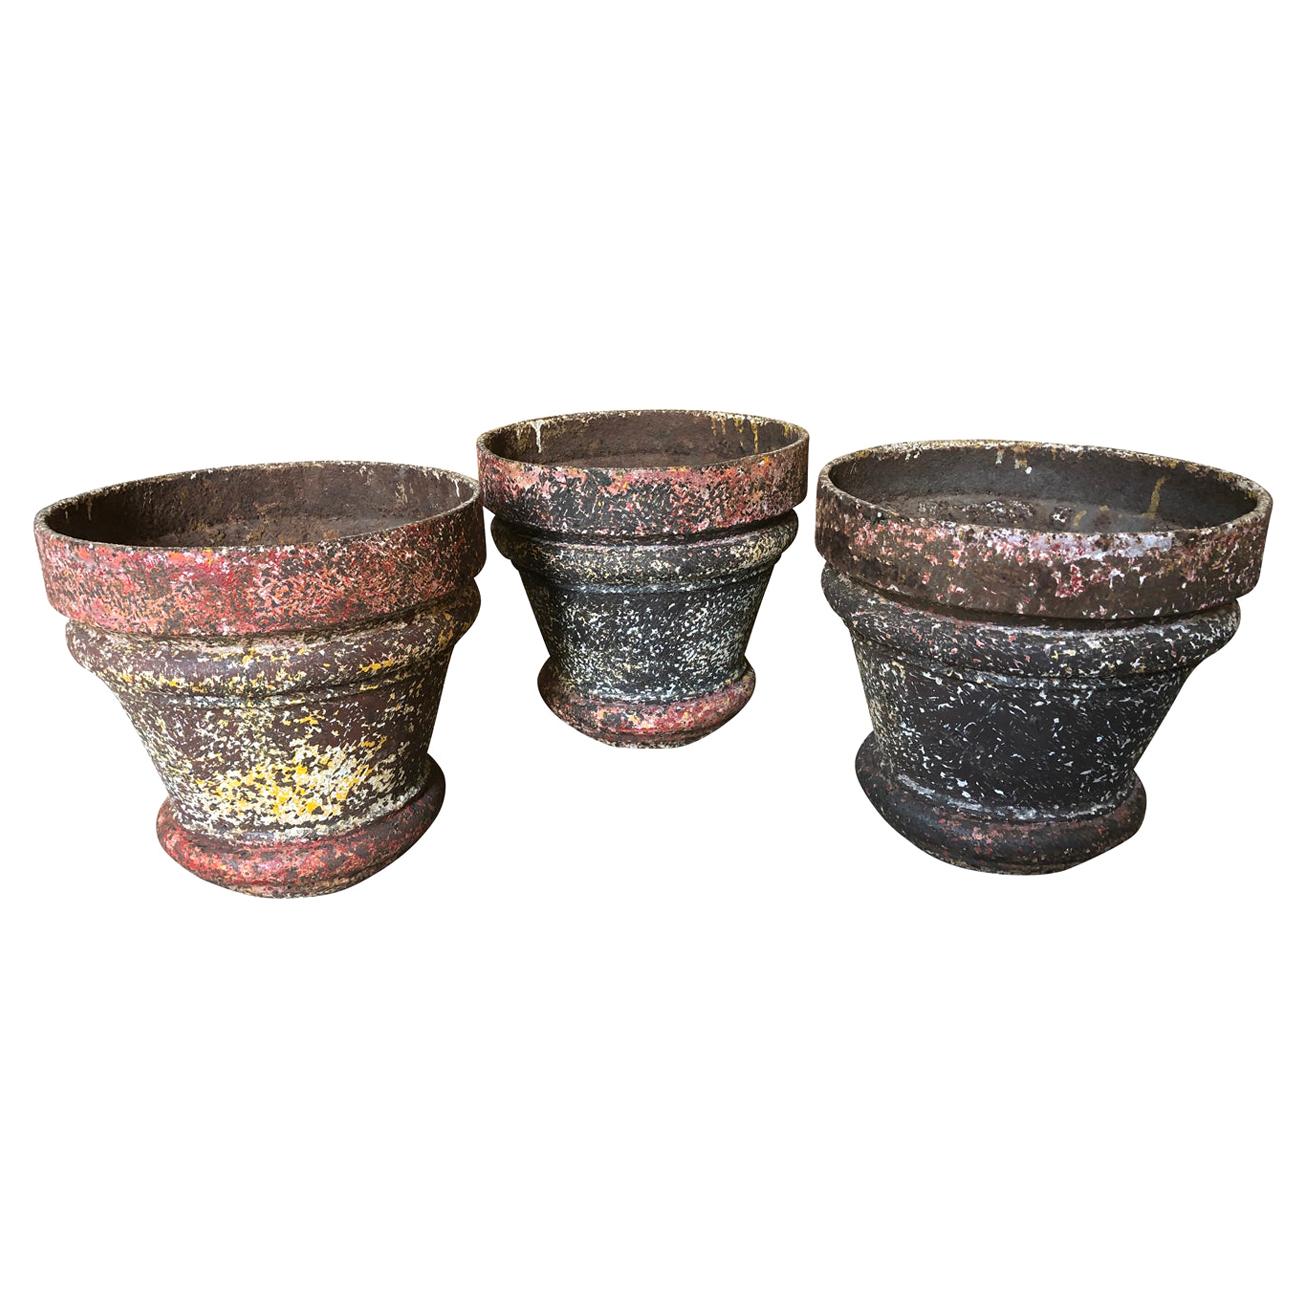 Set of 3 Iron Jardinieres, Cache Pots